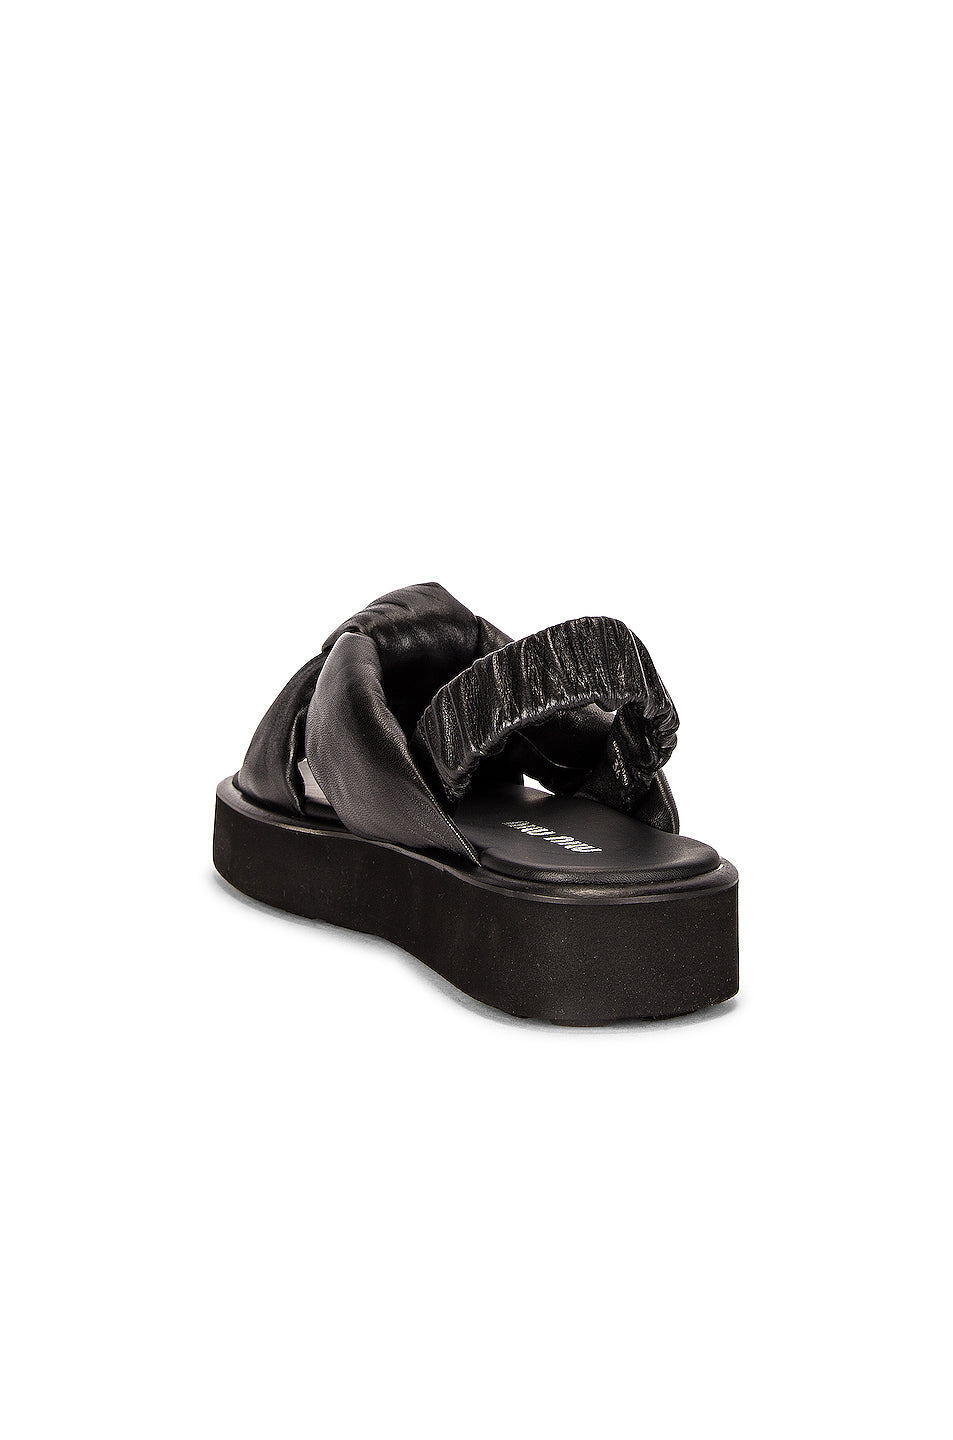 Padded Leather Flatform Sandals